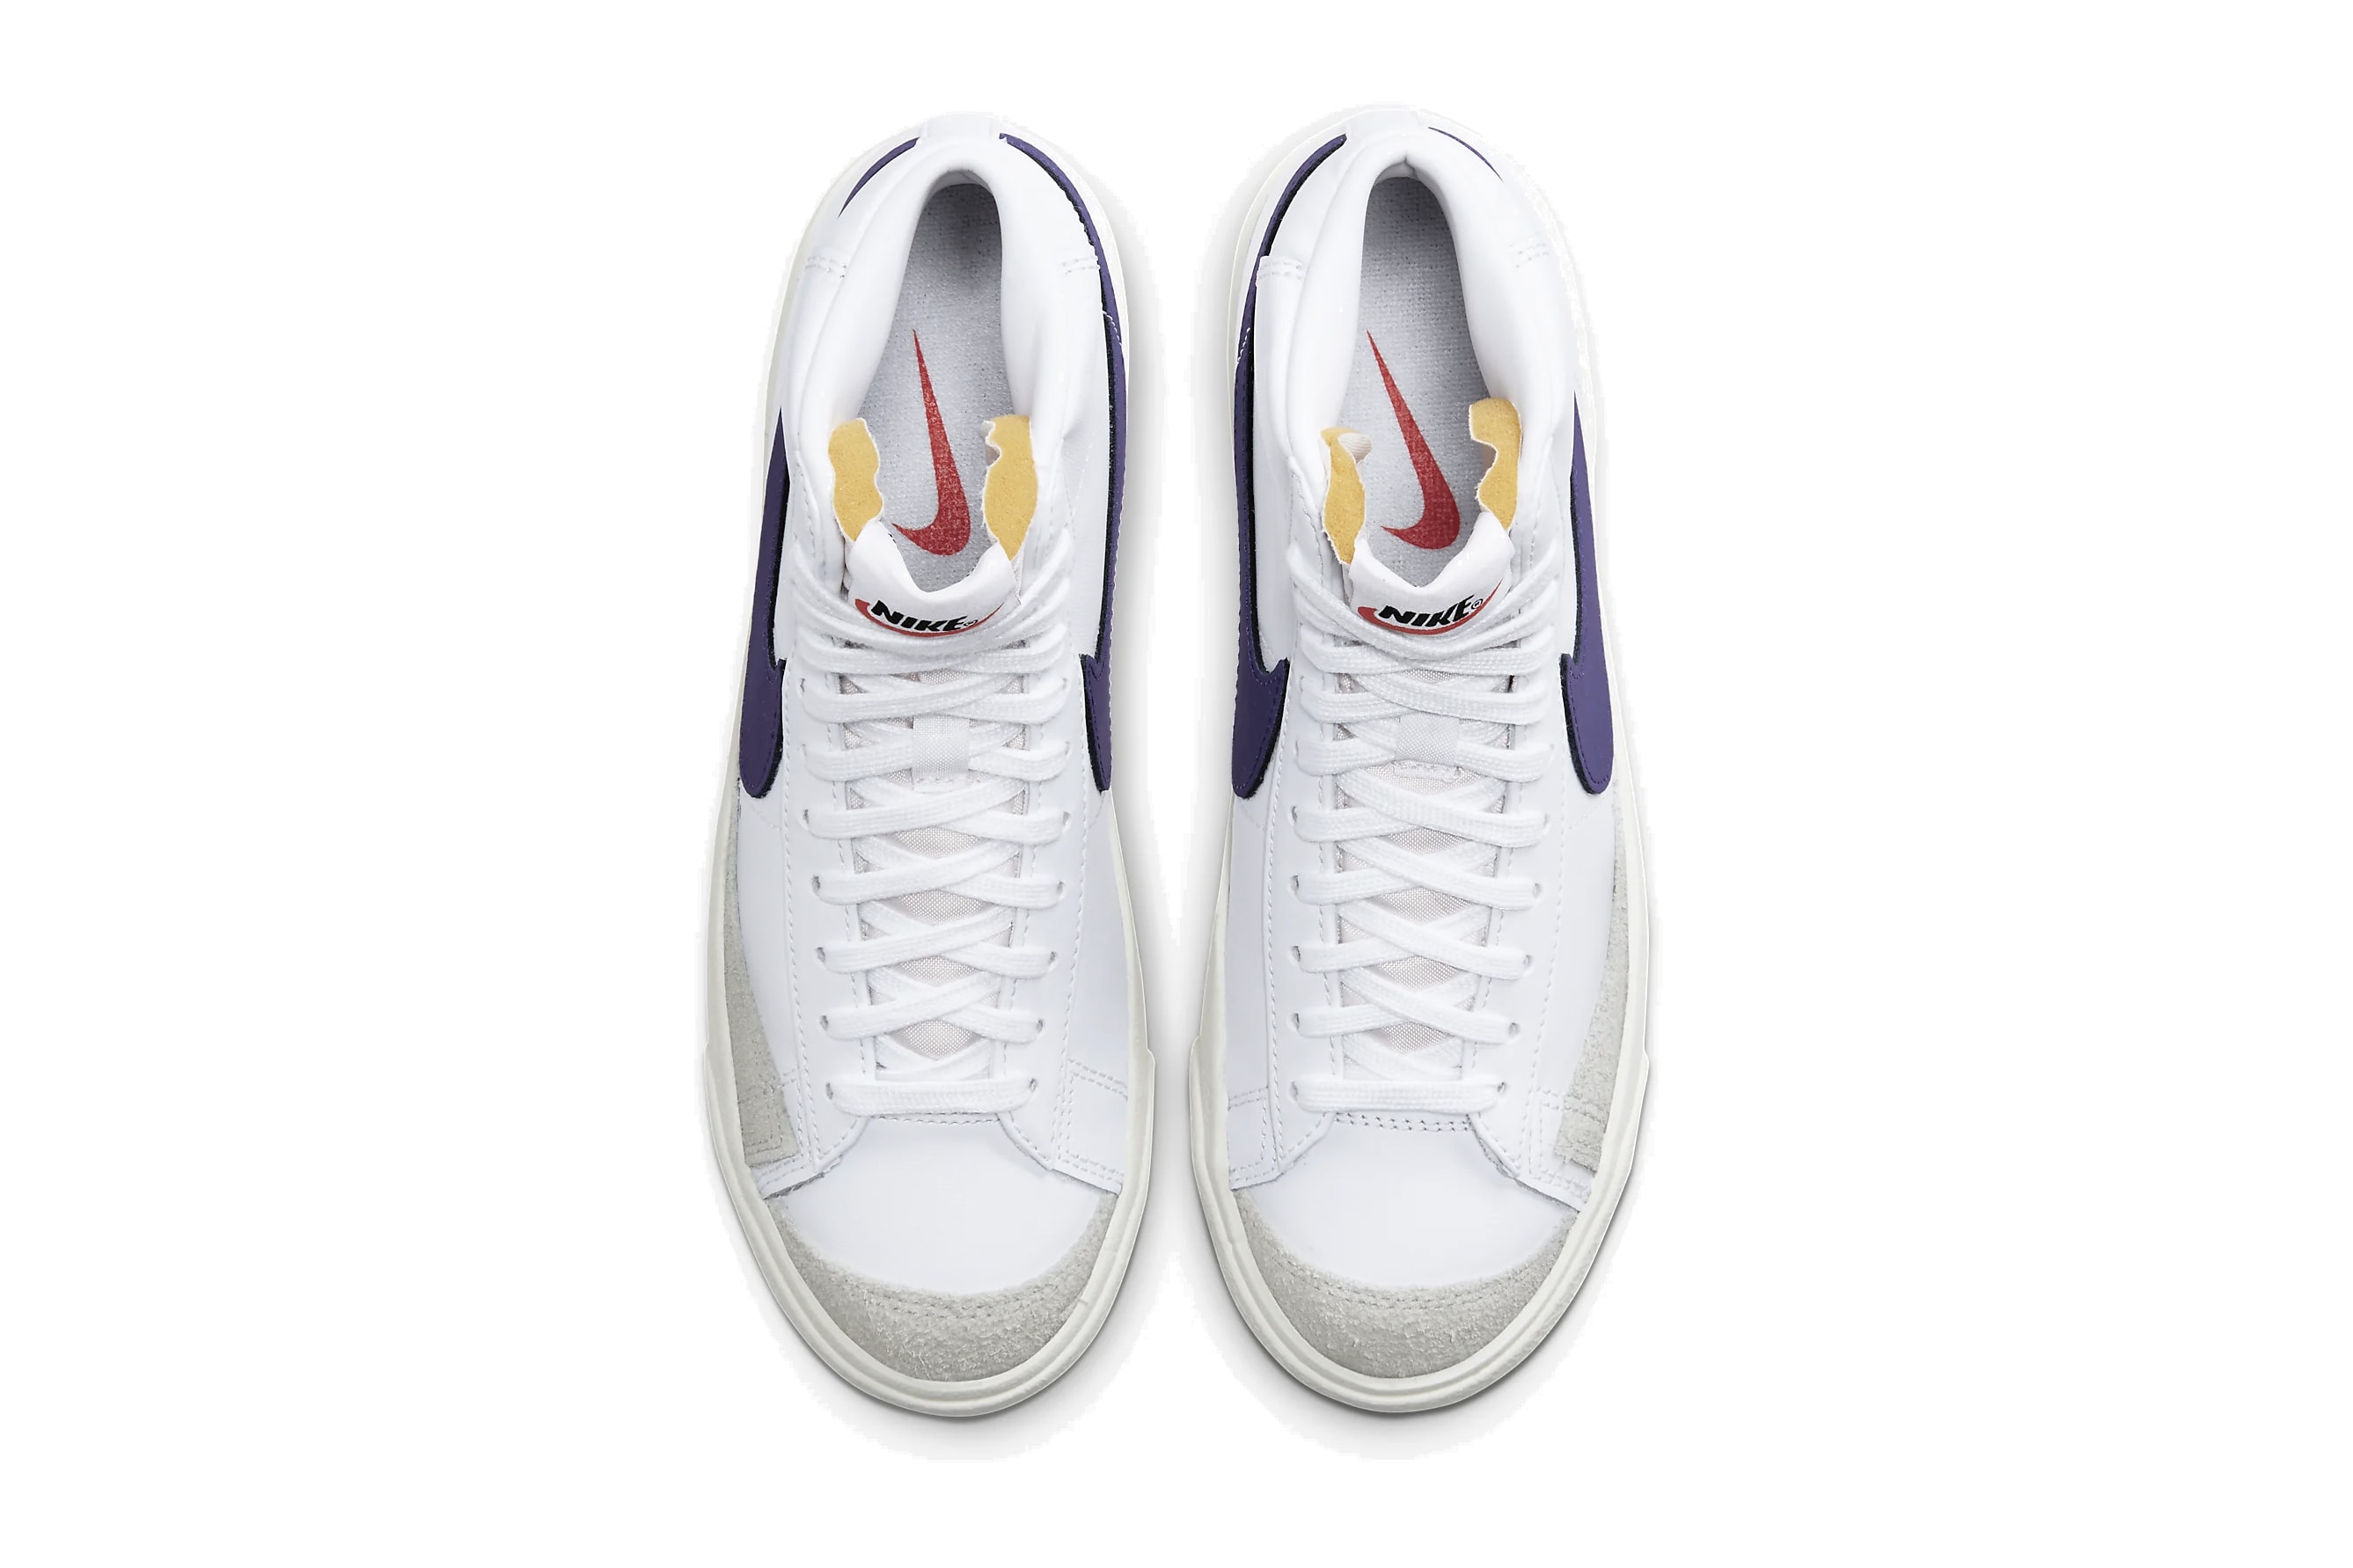 Nike Blazer Mid "Voltage Purple" Sneaker Release Retro Shoe Timeless Spring Summer Trainer